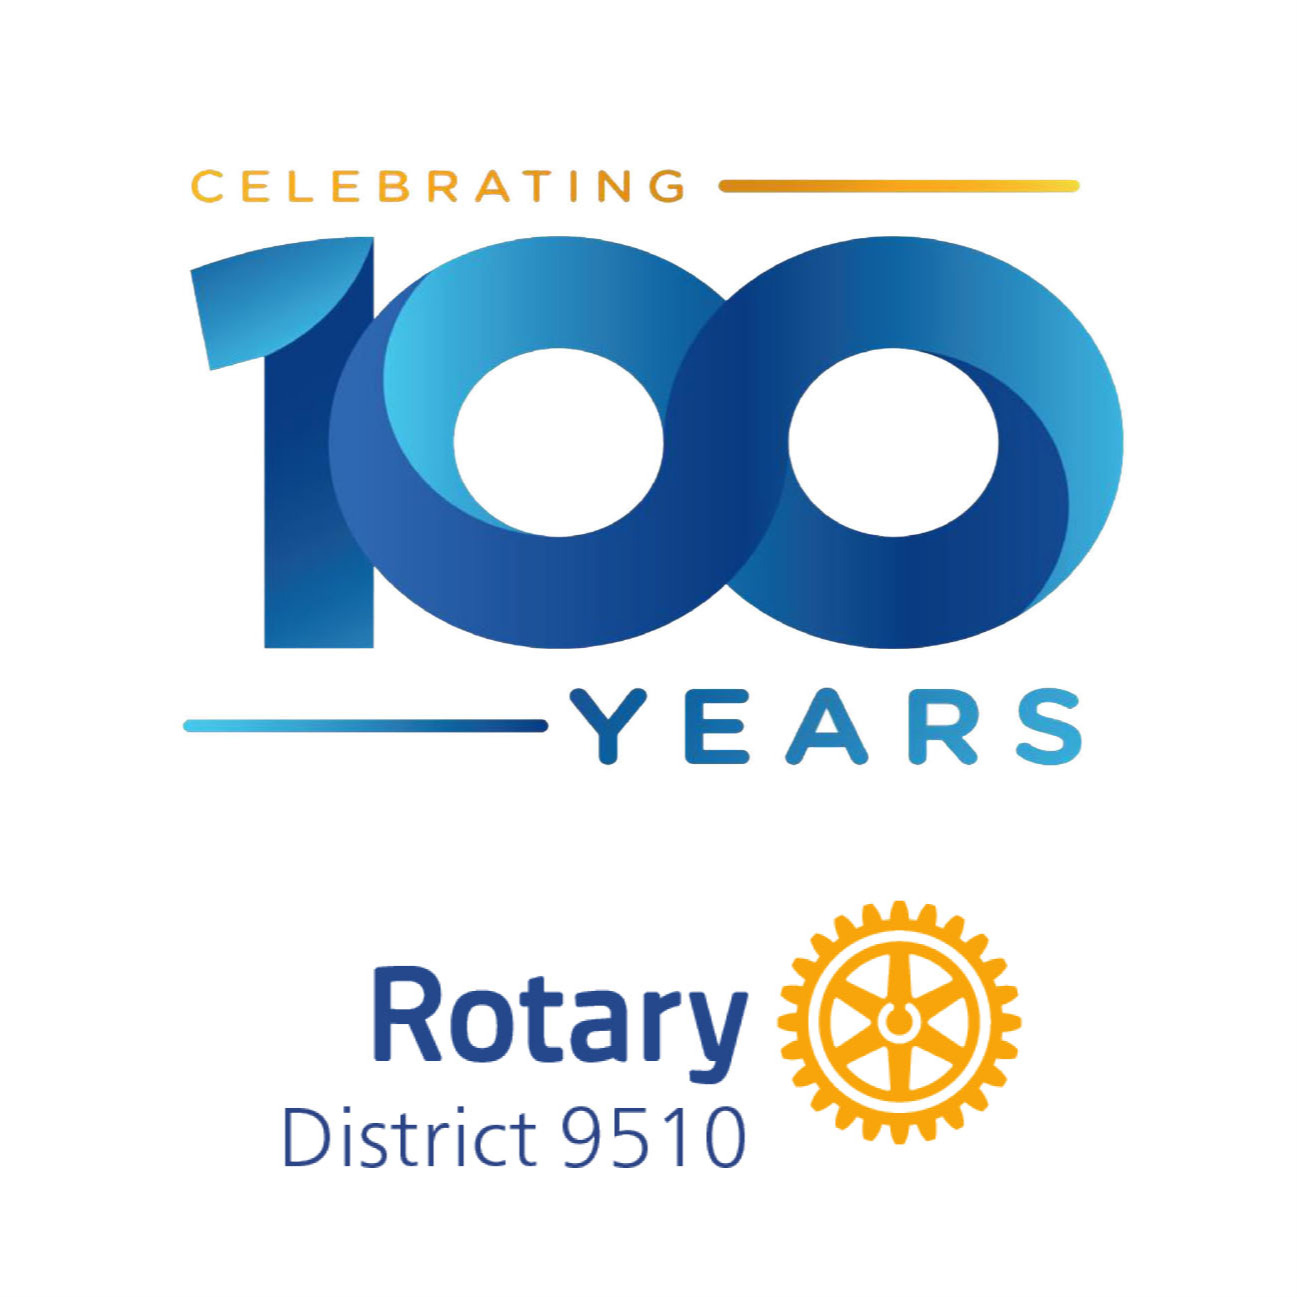 /Rotary - 100 years in SA